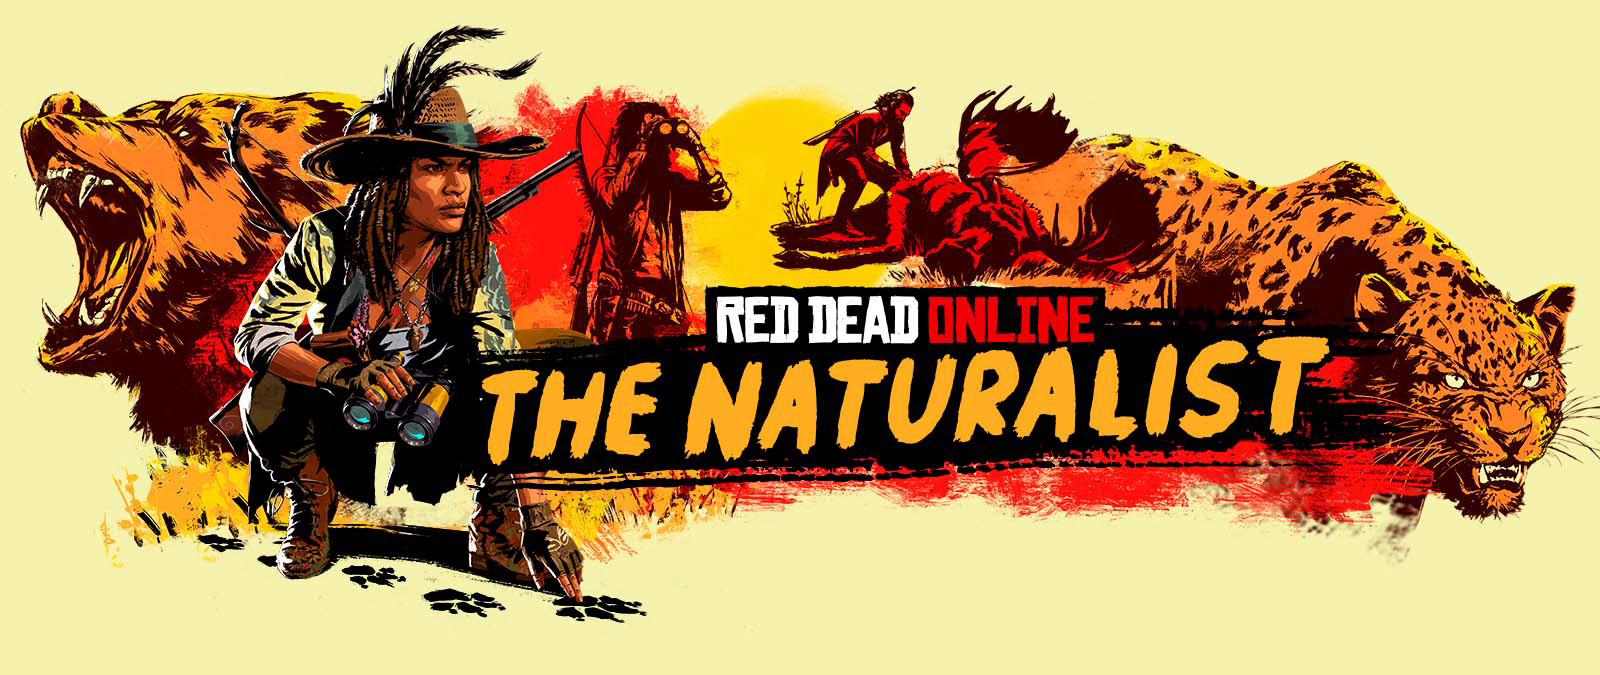 Red Dead OnlineThe Naturalist角色們追蹤並捕捉大型動物。